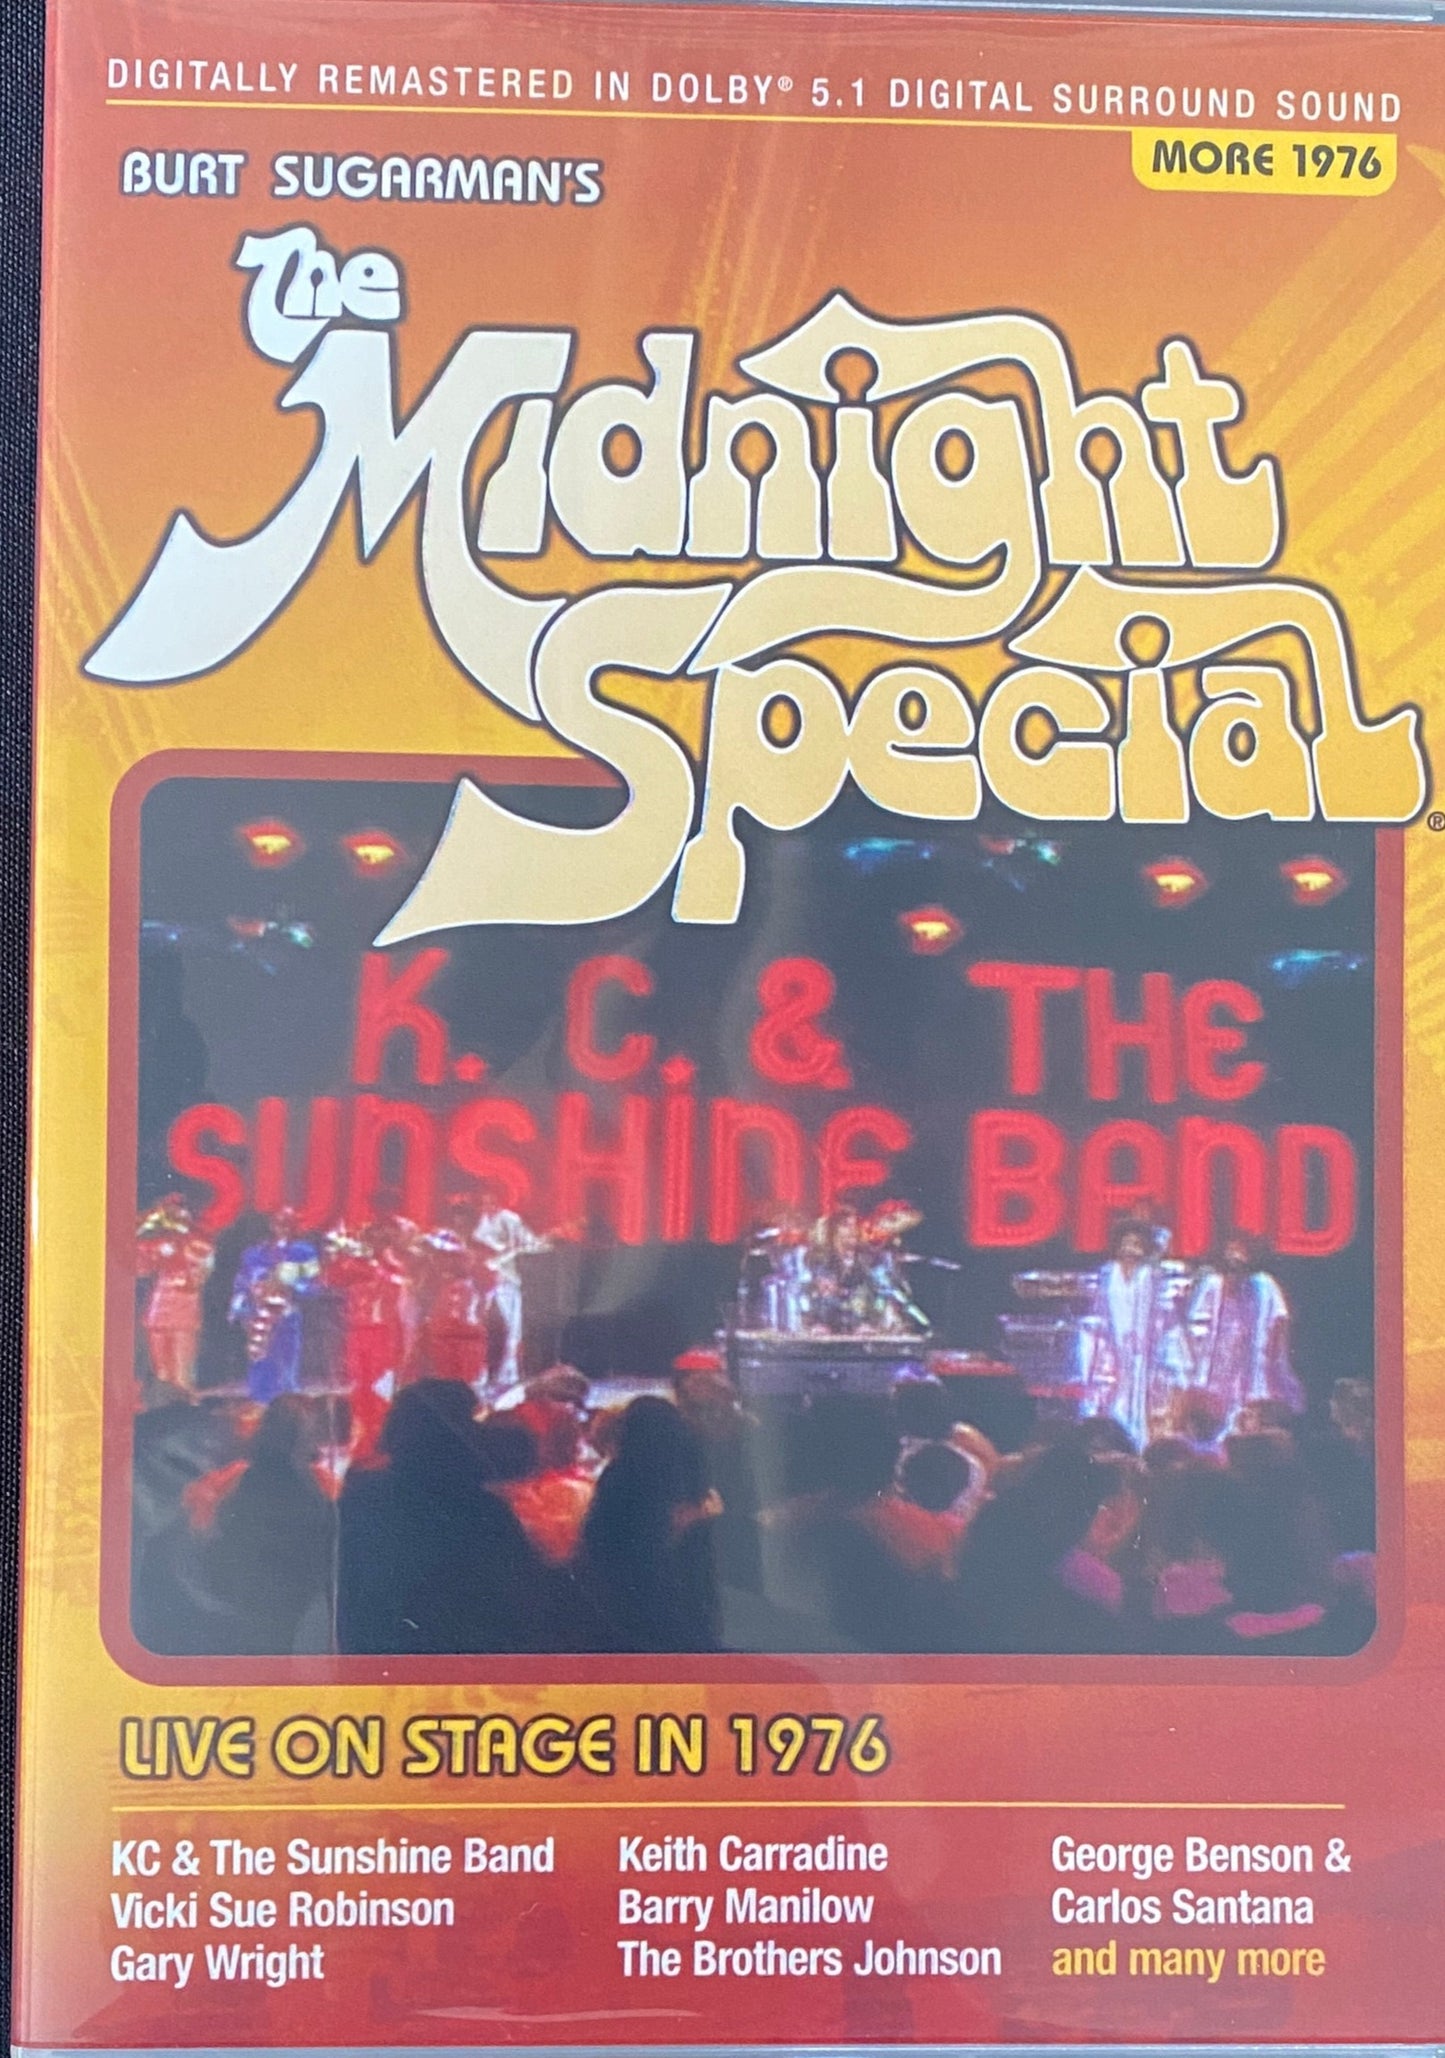 Burt Sugarman's The Midnight Special Live - More 1976